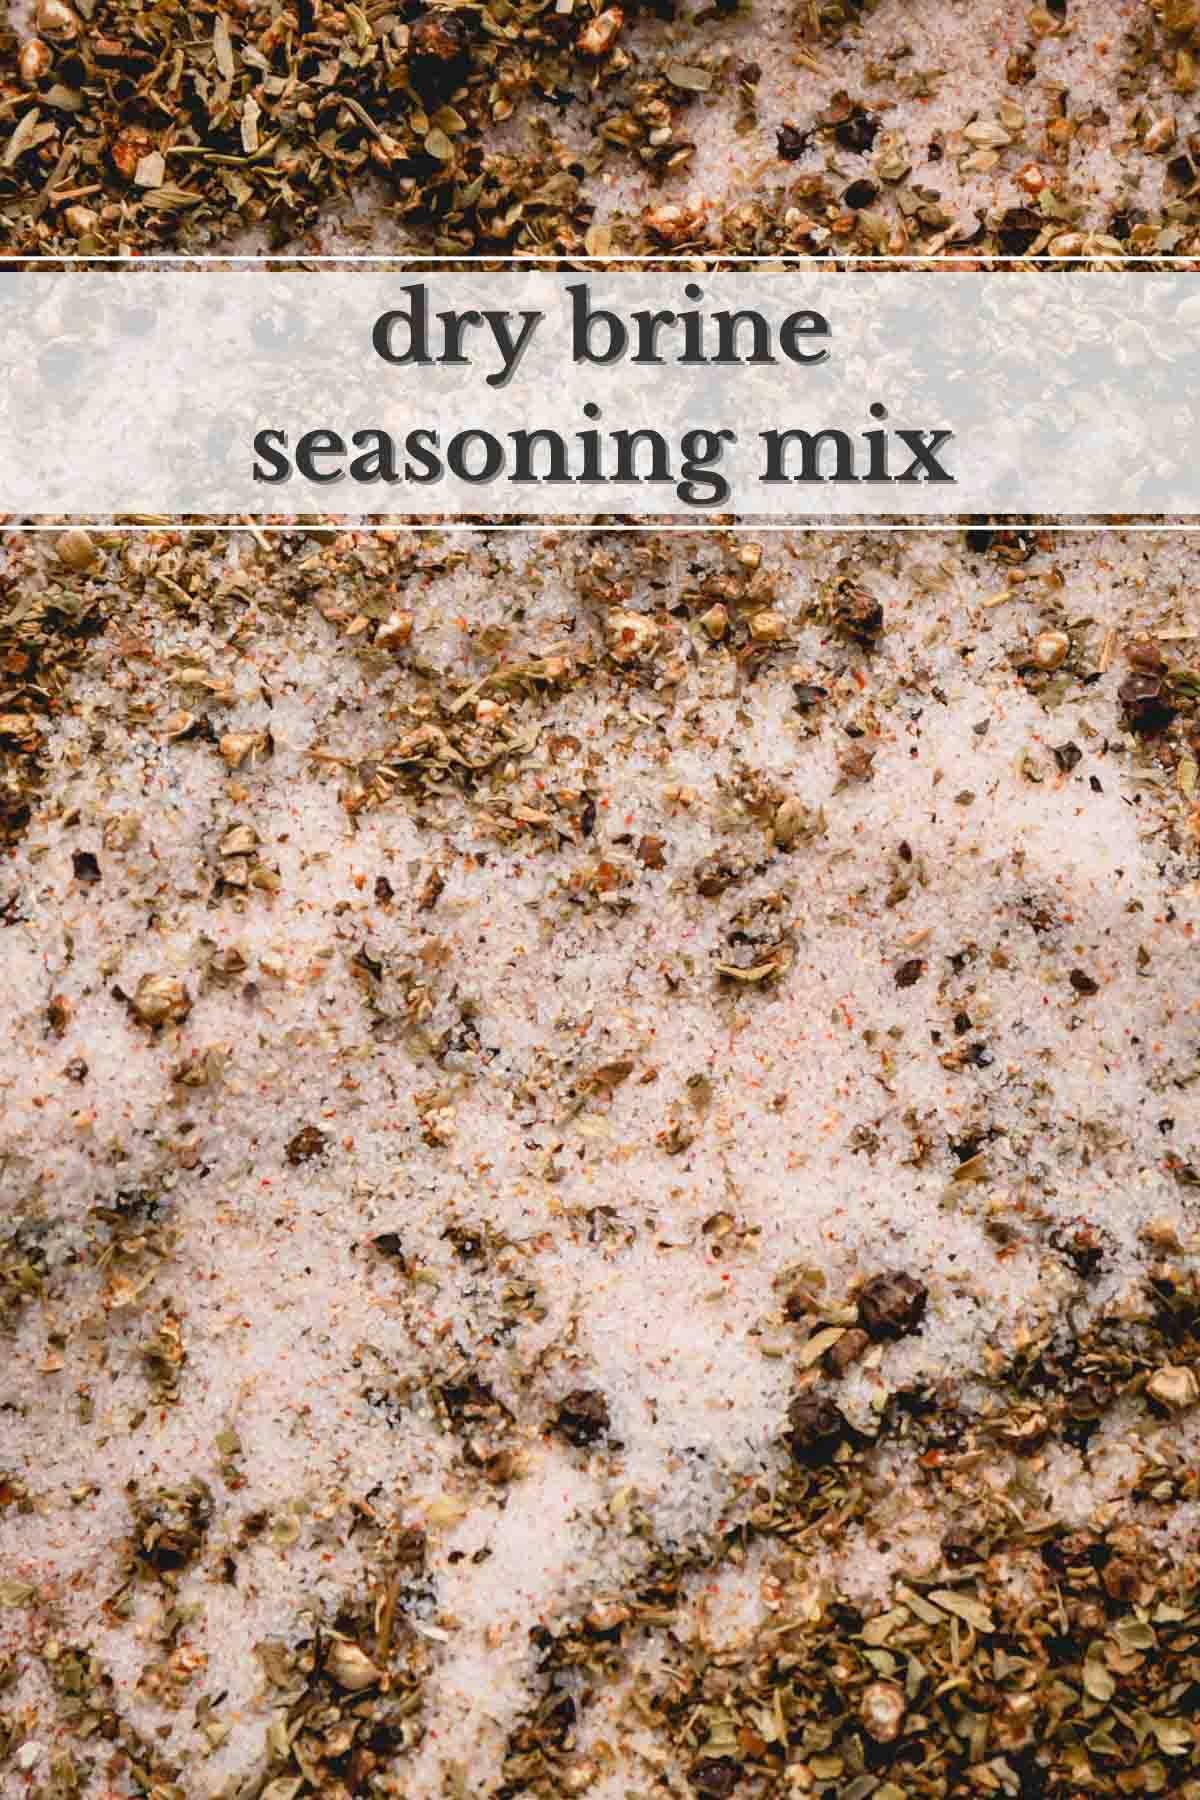 Dry brine seasoning mix.